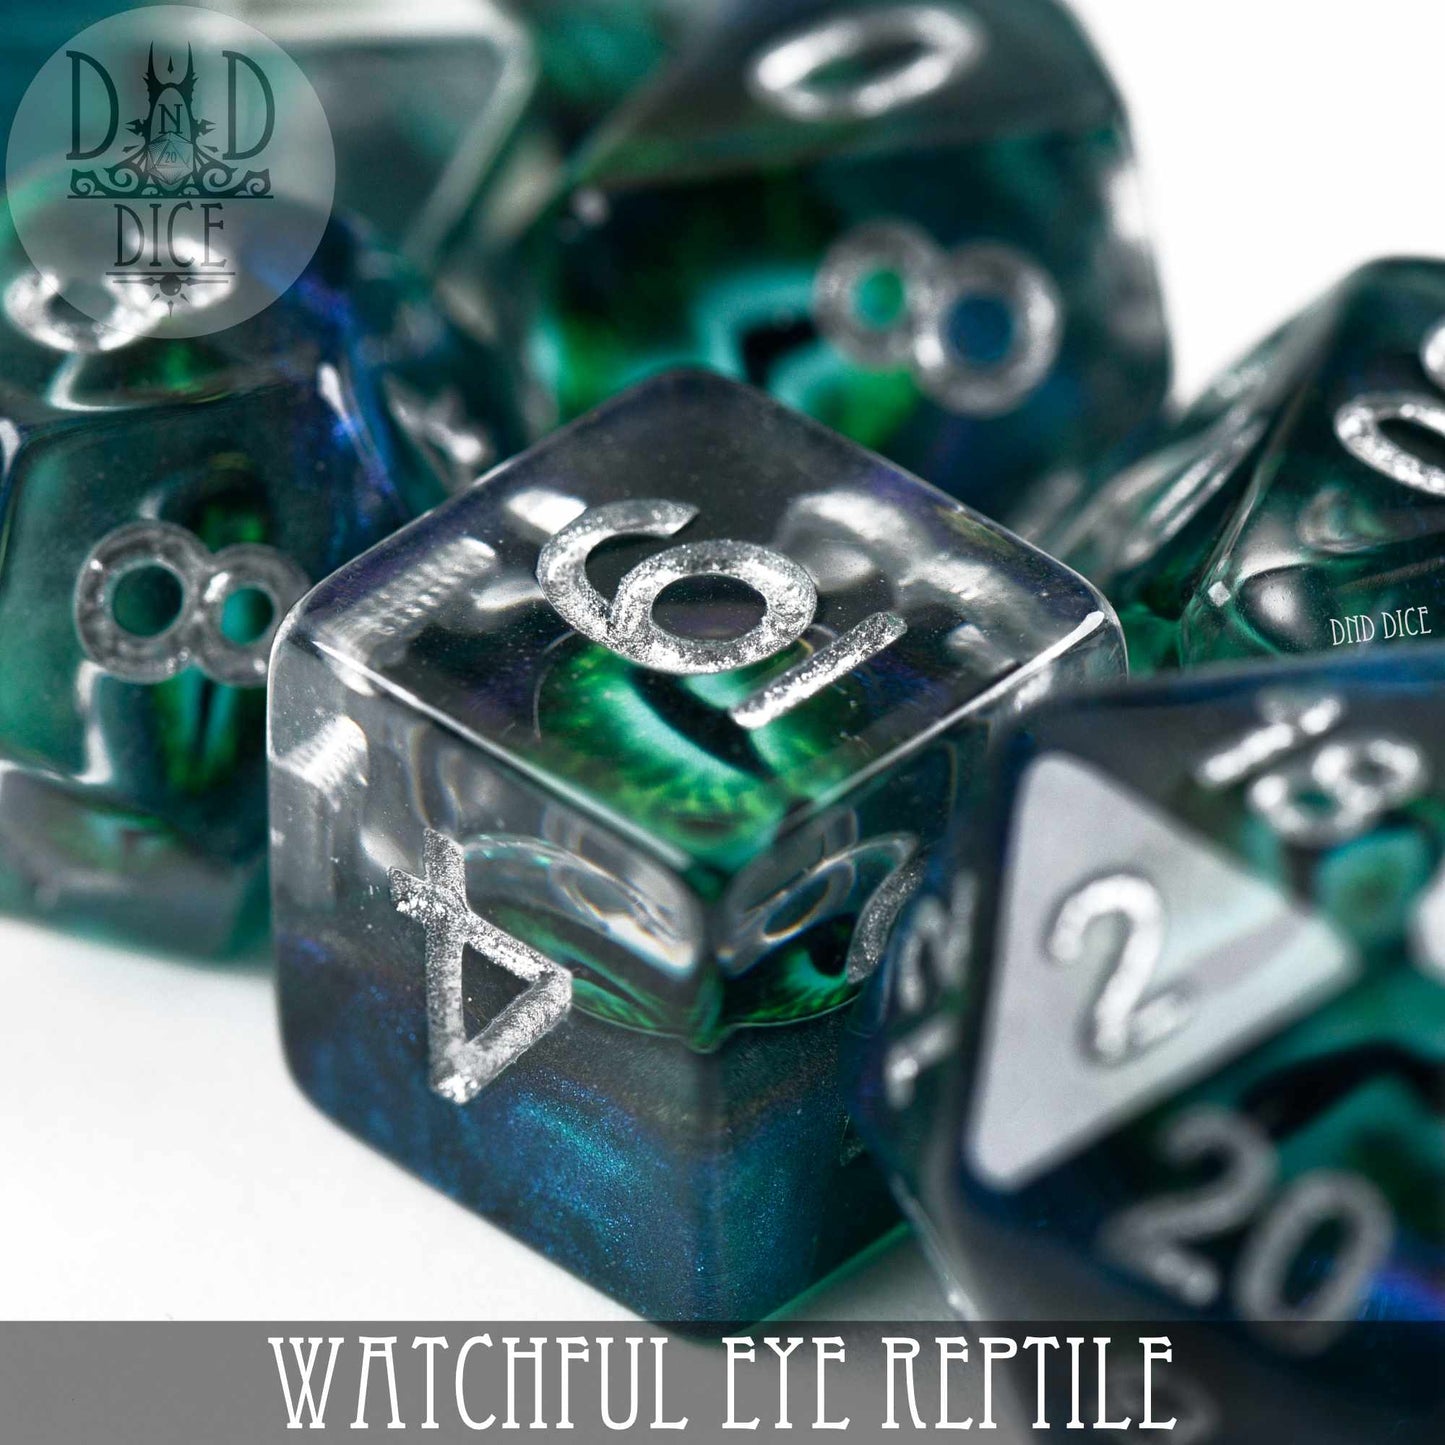 Watchful Eye - Reptile Dice Set